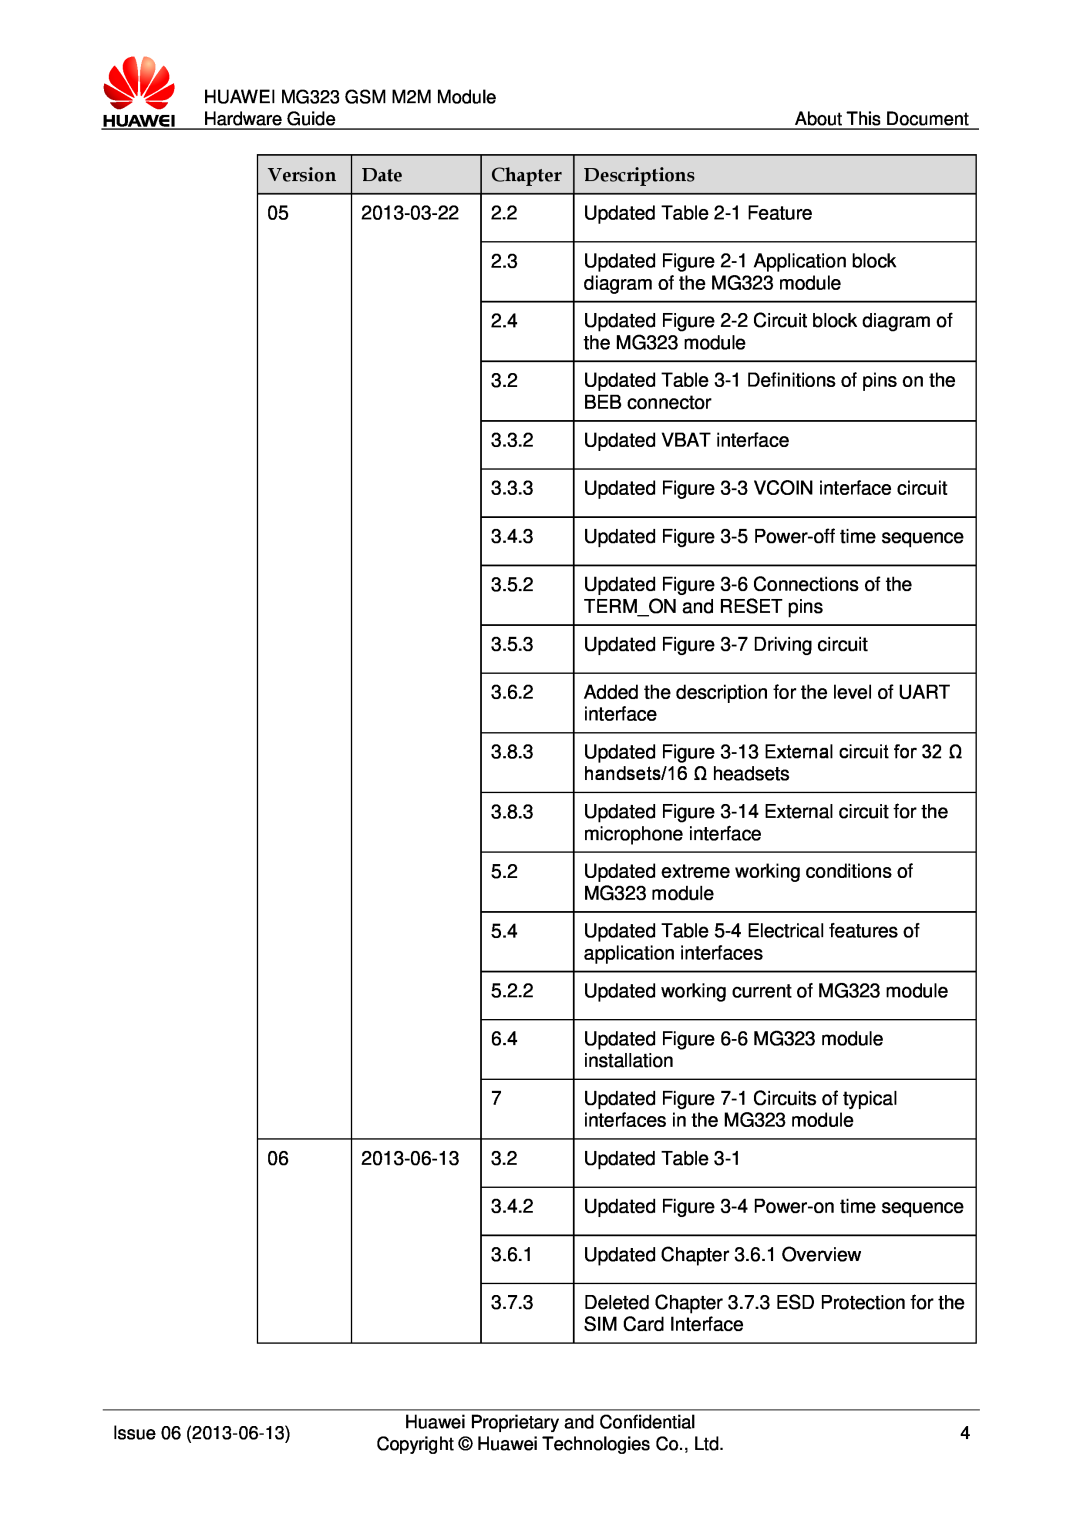 Huawei MG323 manual Version, Date, Chapter, Descriptions 